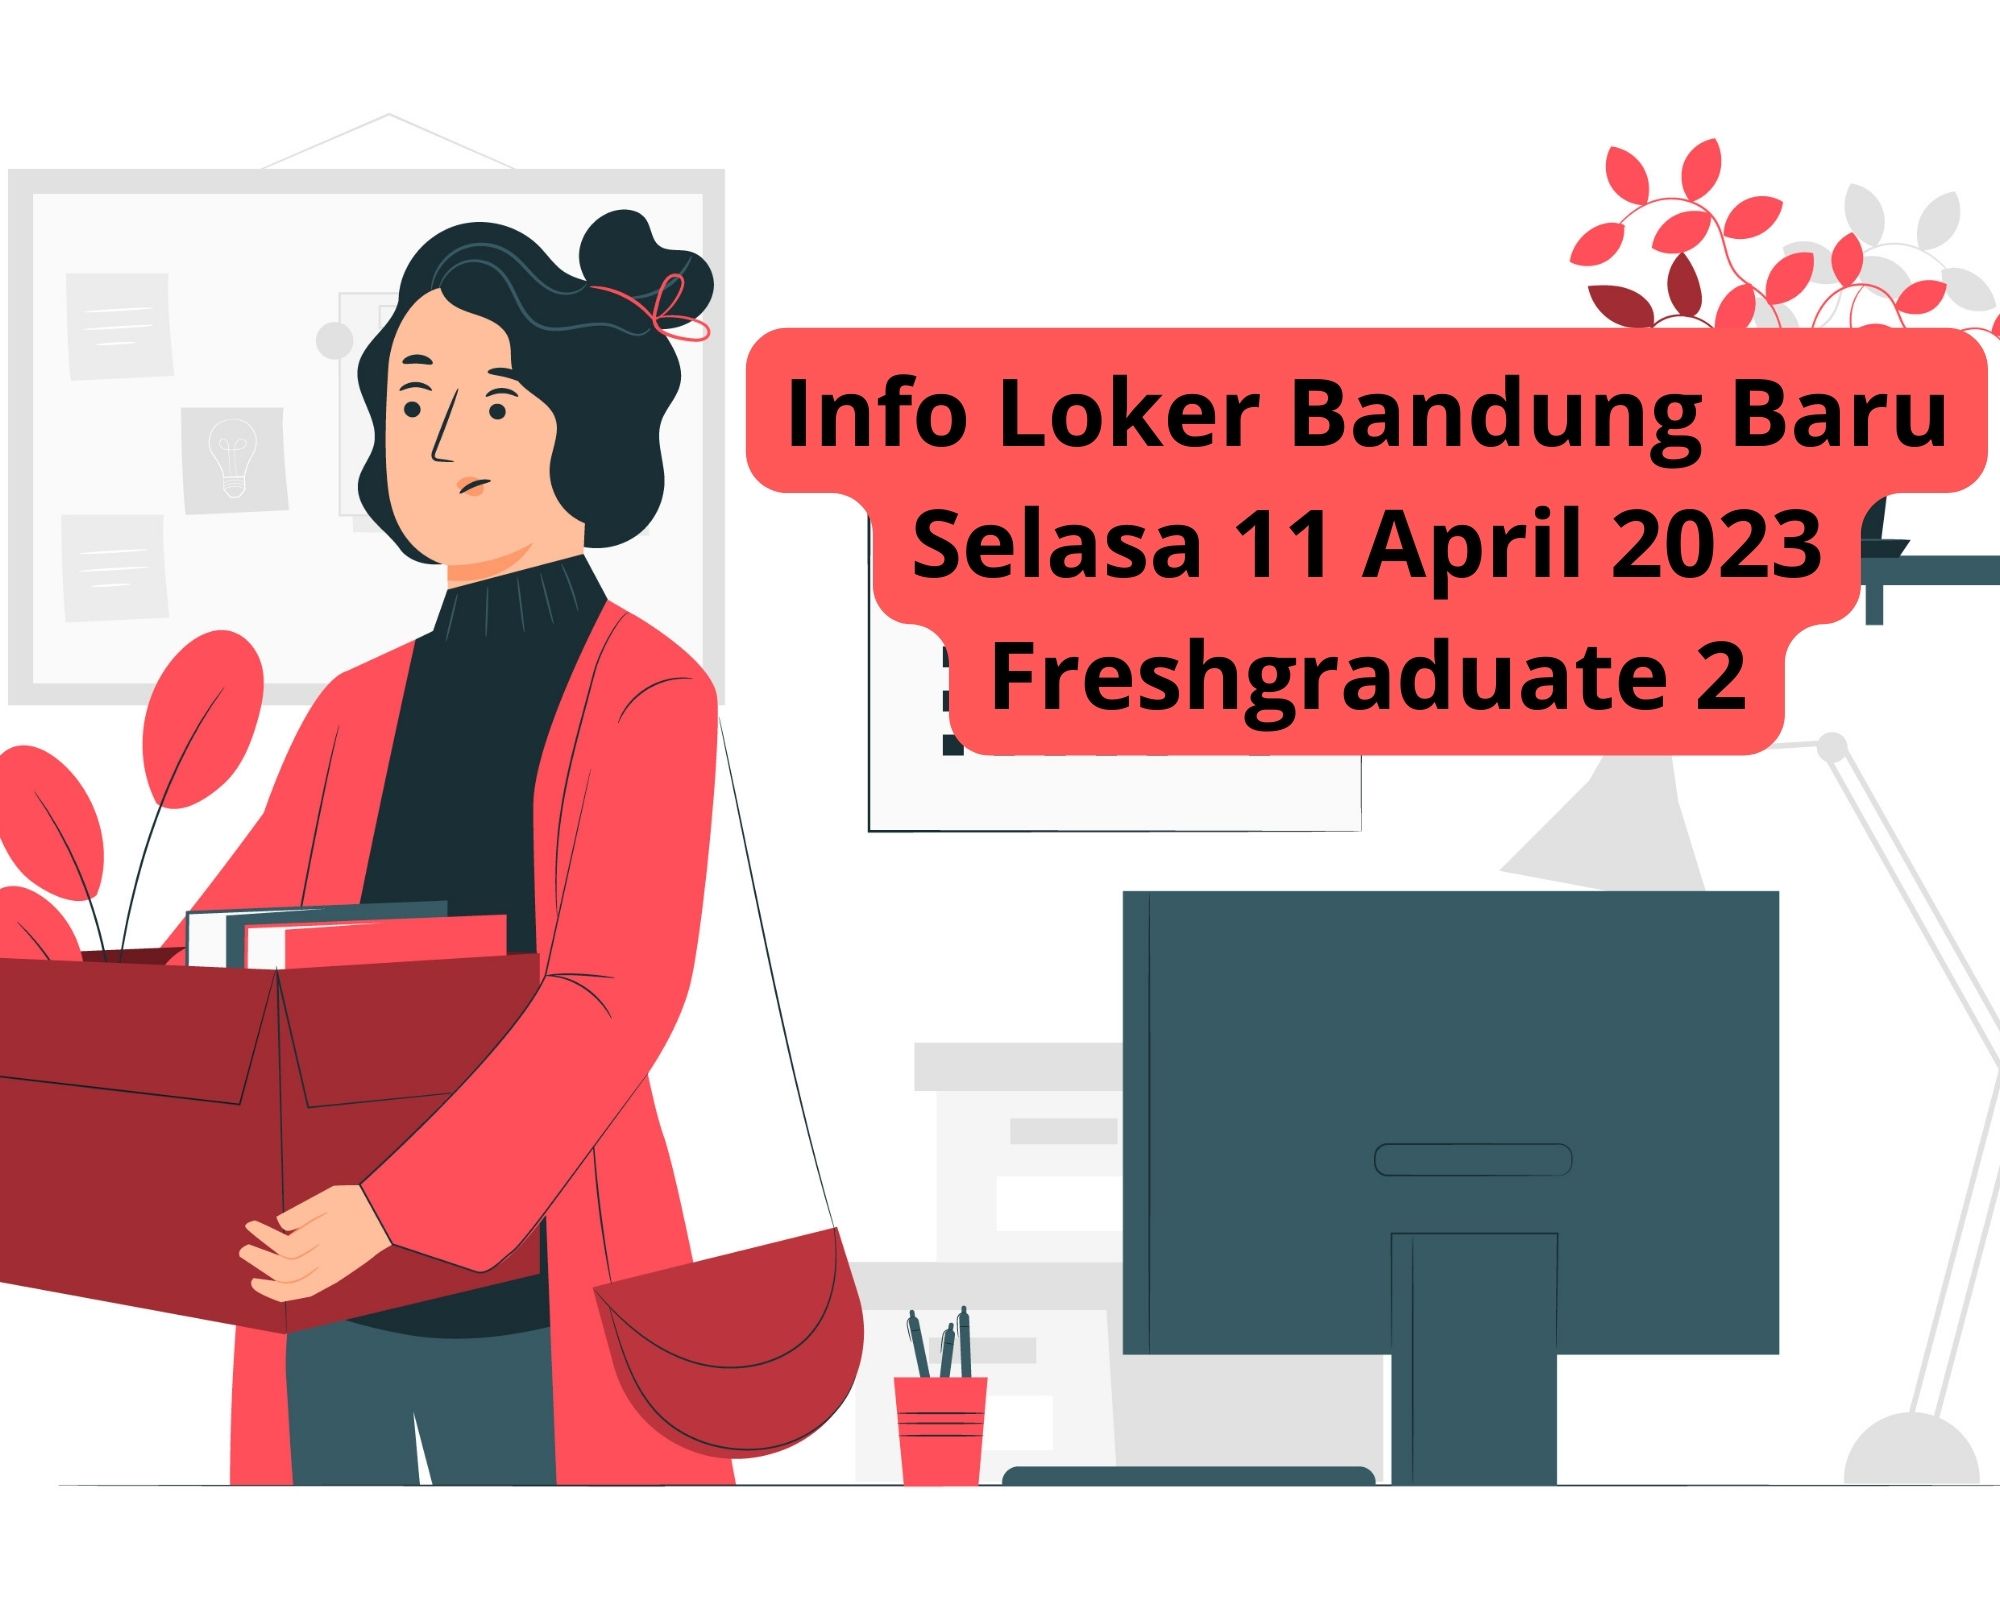 Info Loker Bandung Baru Selasa 11 April 2023 Freshgraduate 2